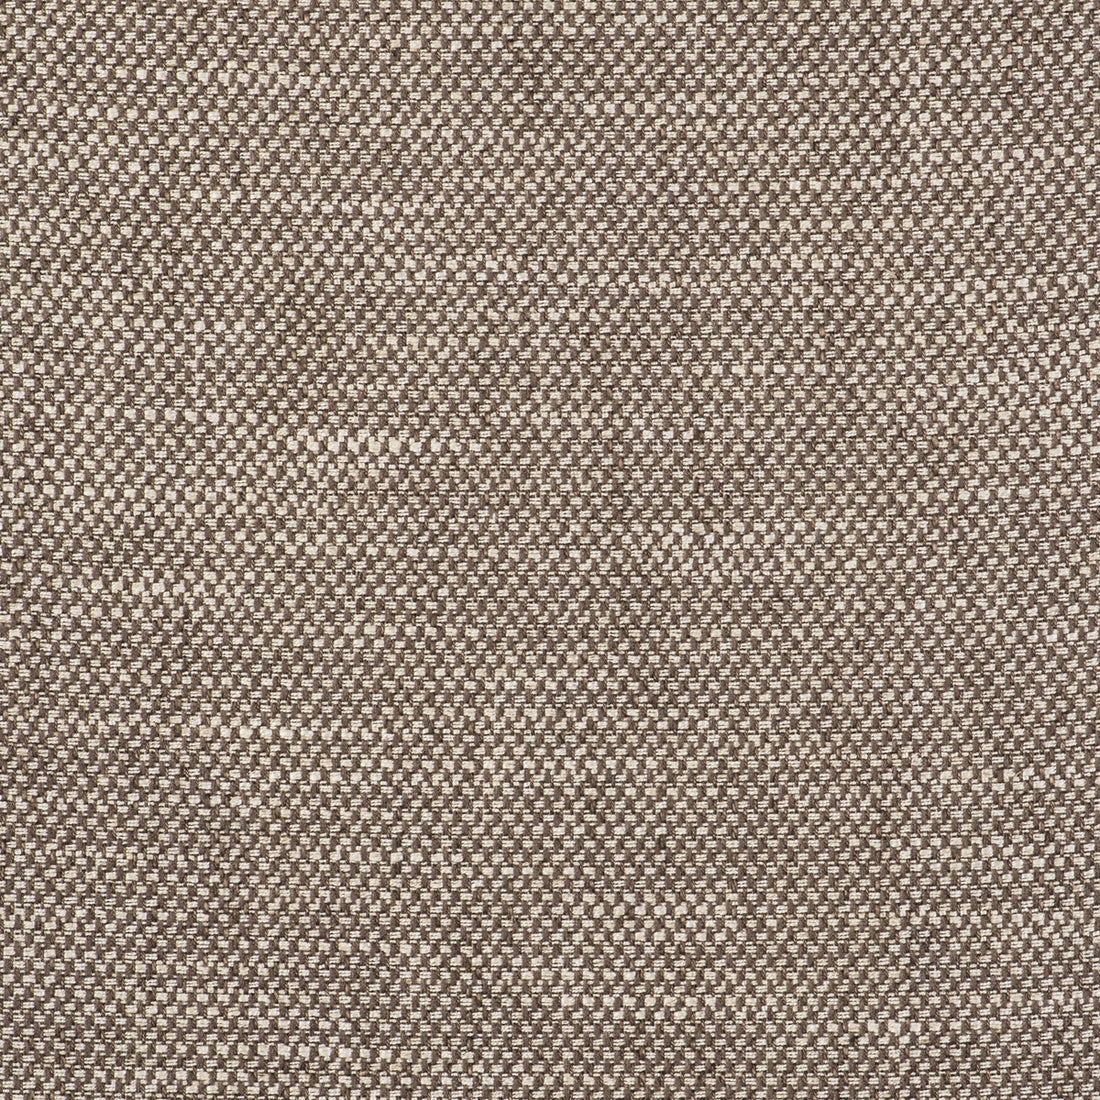 Acacia fabric in tostado color - pattern GDT5519.002.0 - by Gaston y Daniela in the Gaston Libreria collection